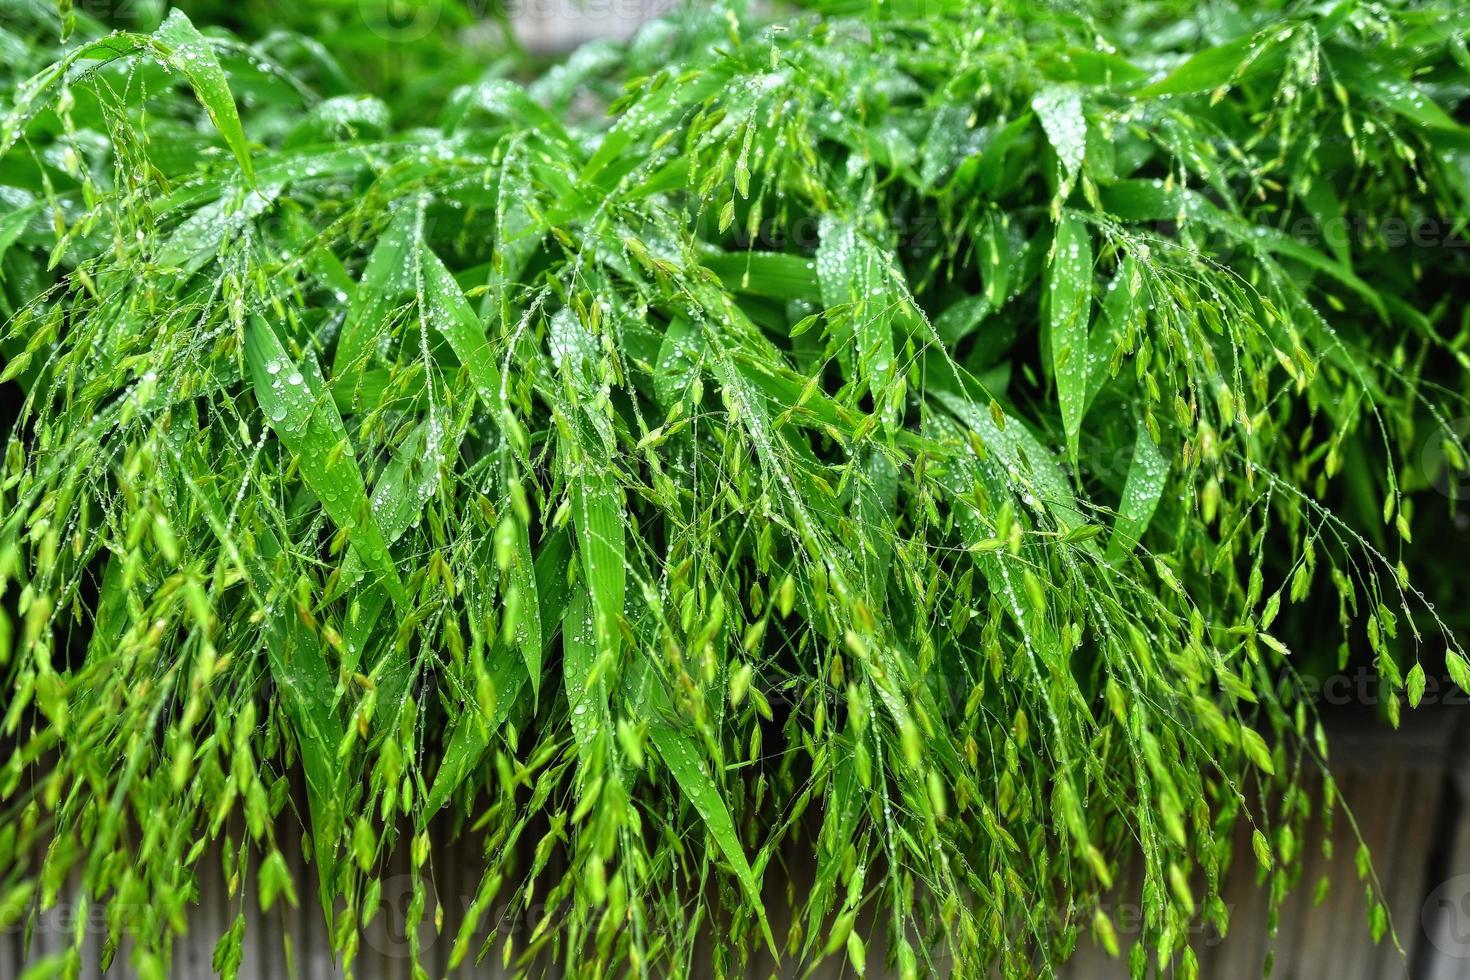 enfoque selectivo. imagen. Close-up de follaje verde fresco con gotas de agua después de la lluvia - imagen foto